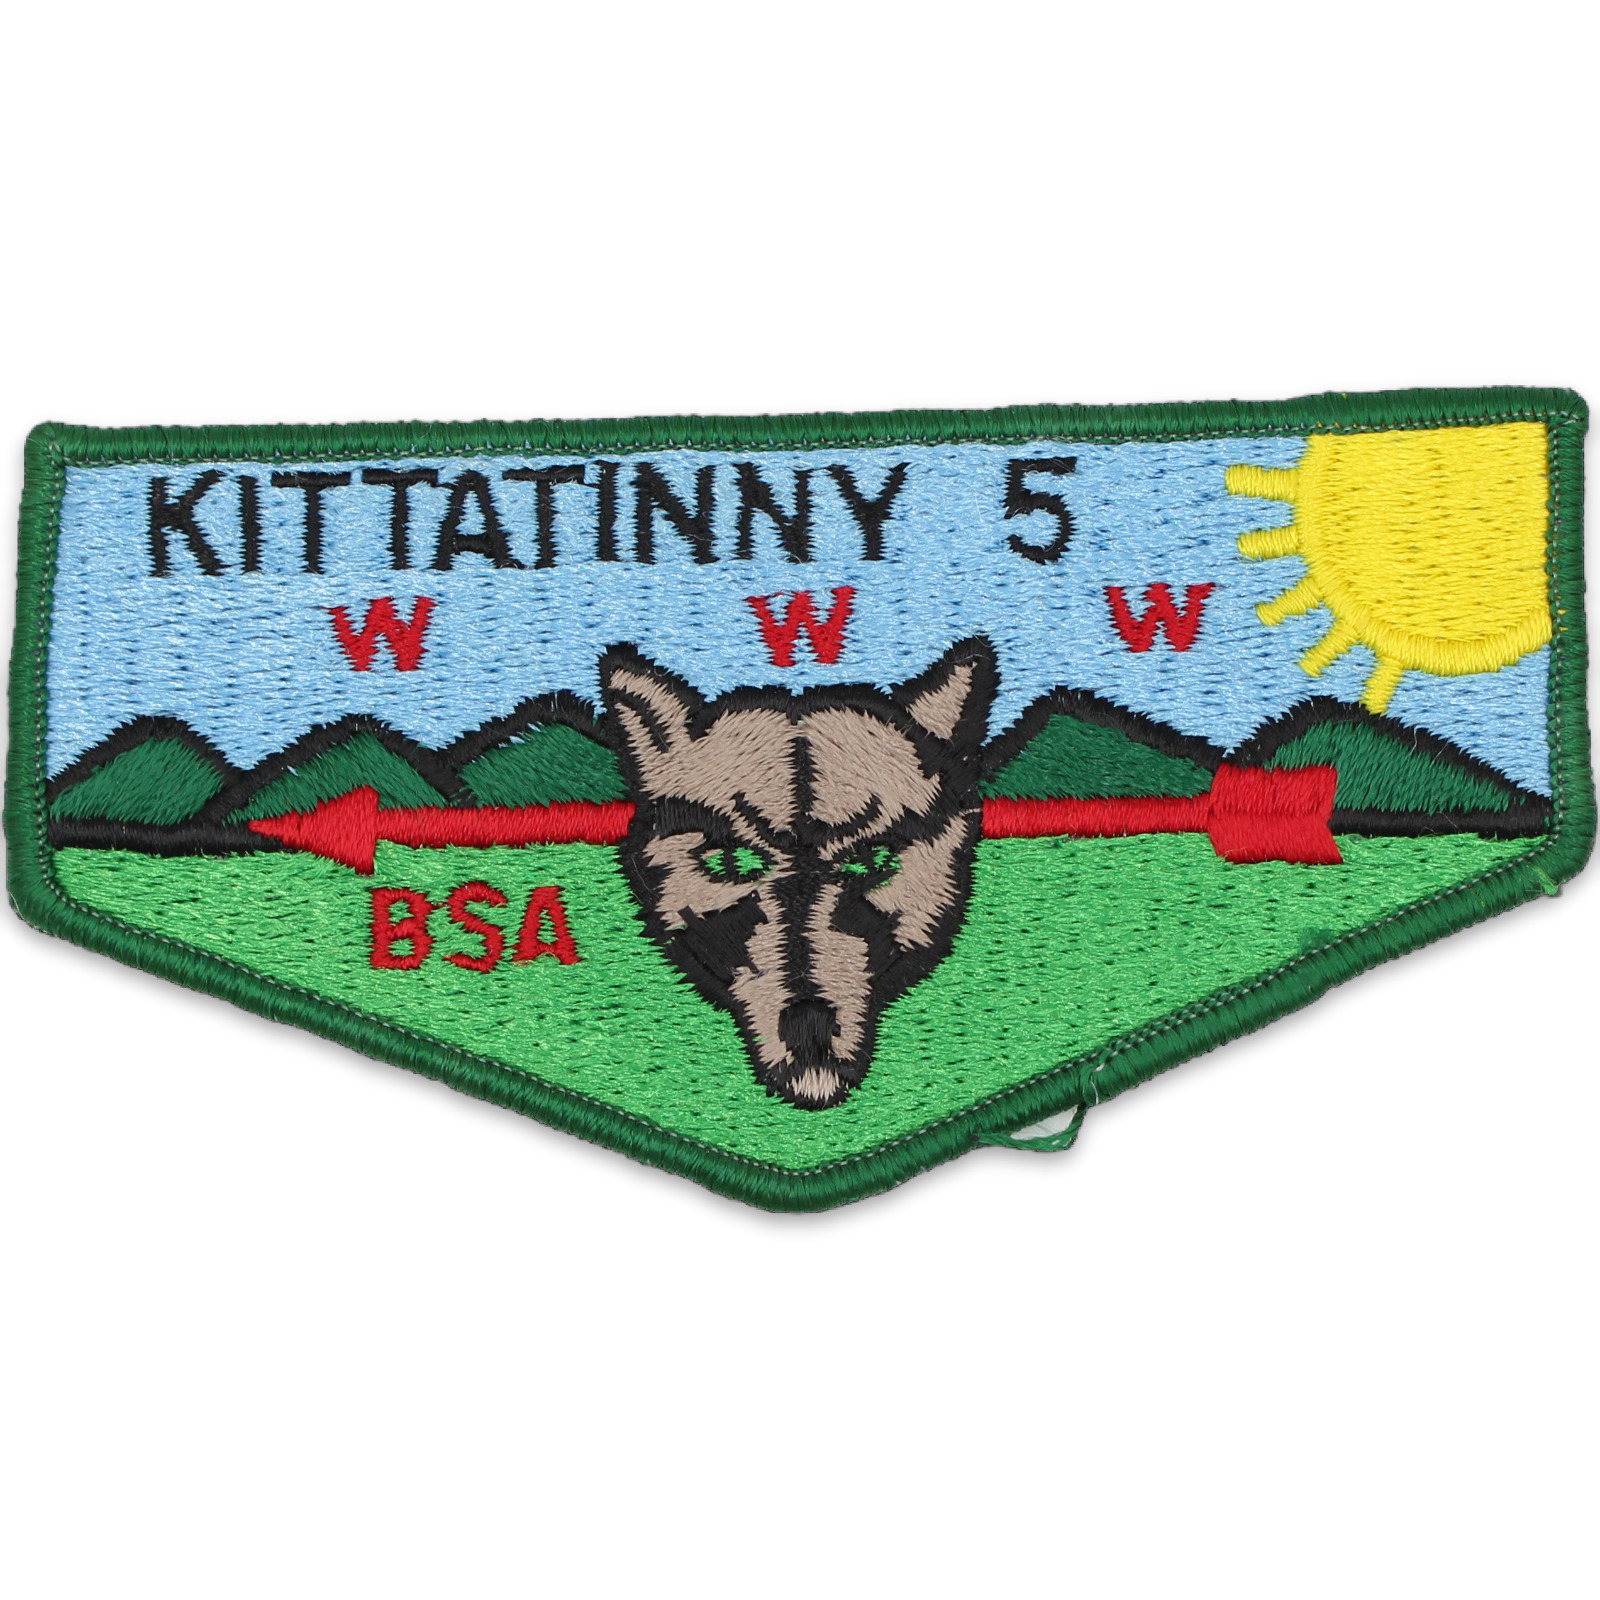 S7 Kittatinny Lodge 5 Flap Hawk Mountain Council Patch BSA OA Pennsylvania PA